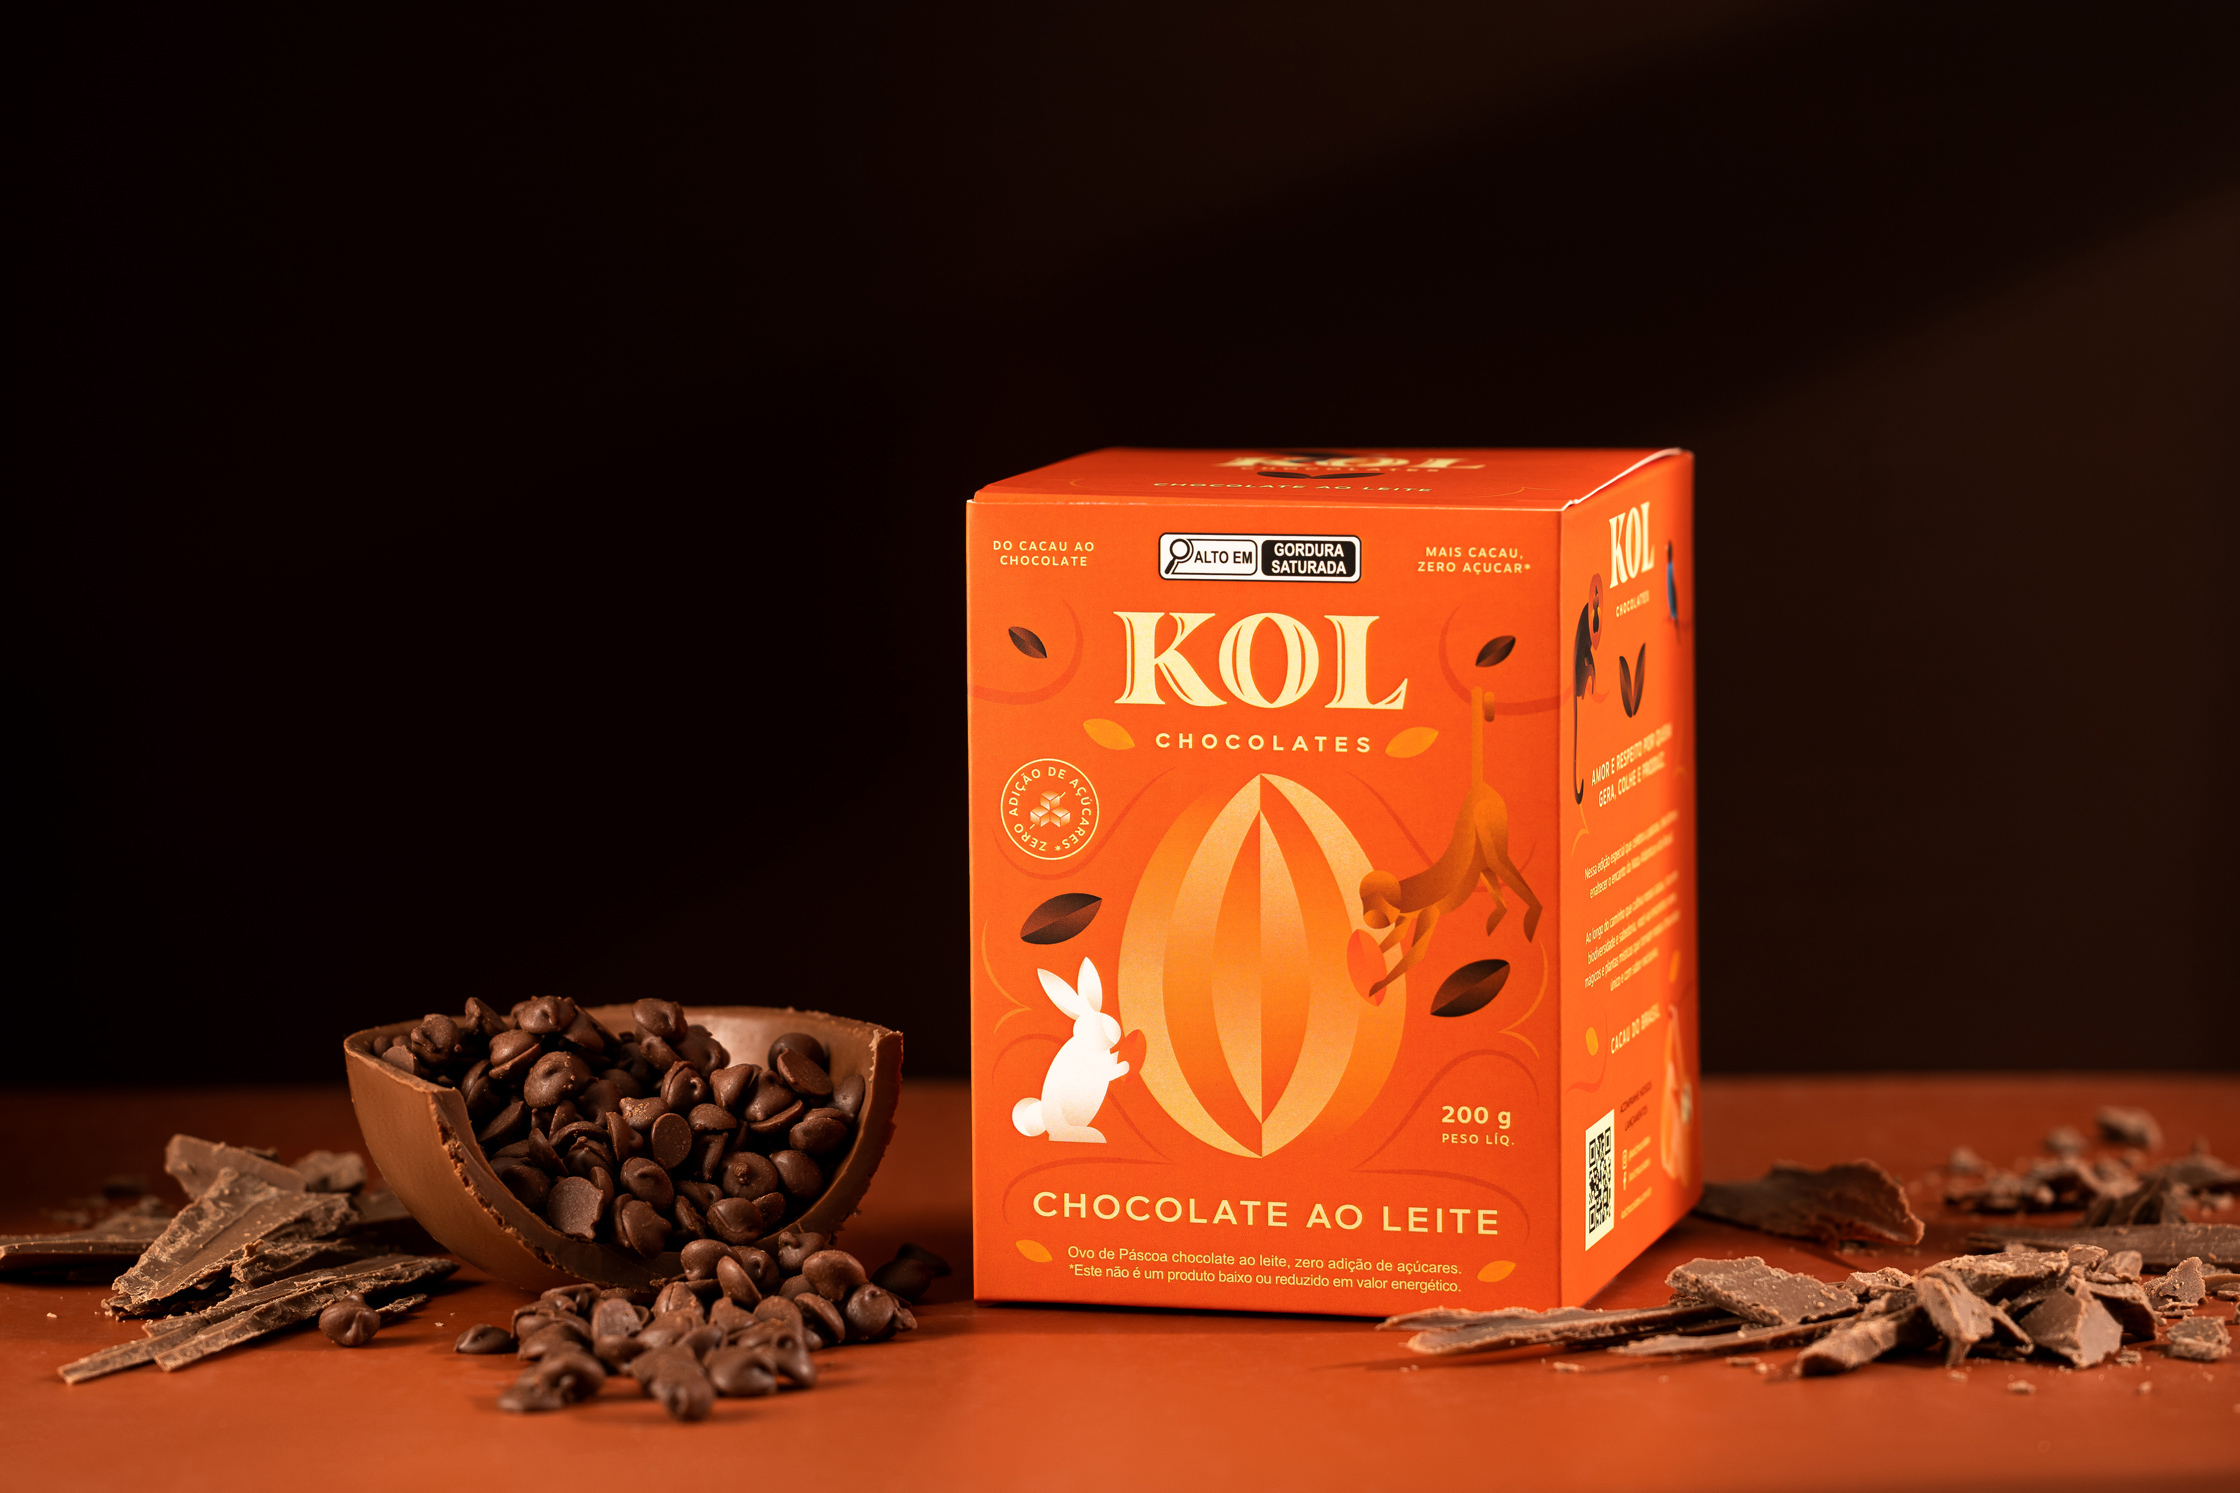 Kol Chocolates Packaging Design & Illustrations by Sabrina Sanalles